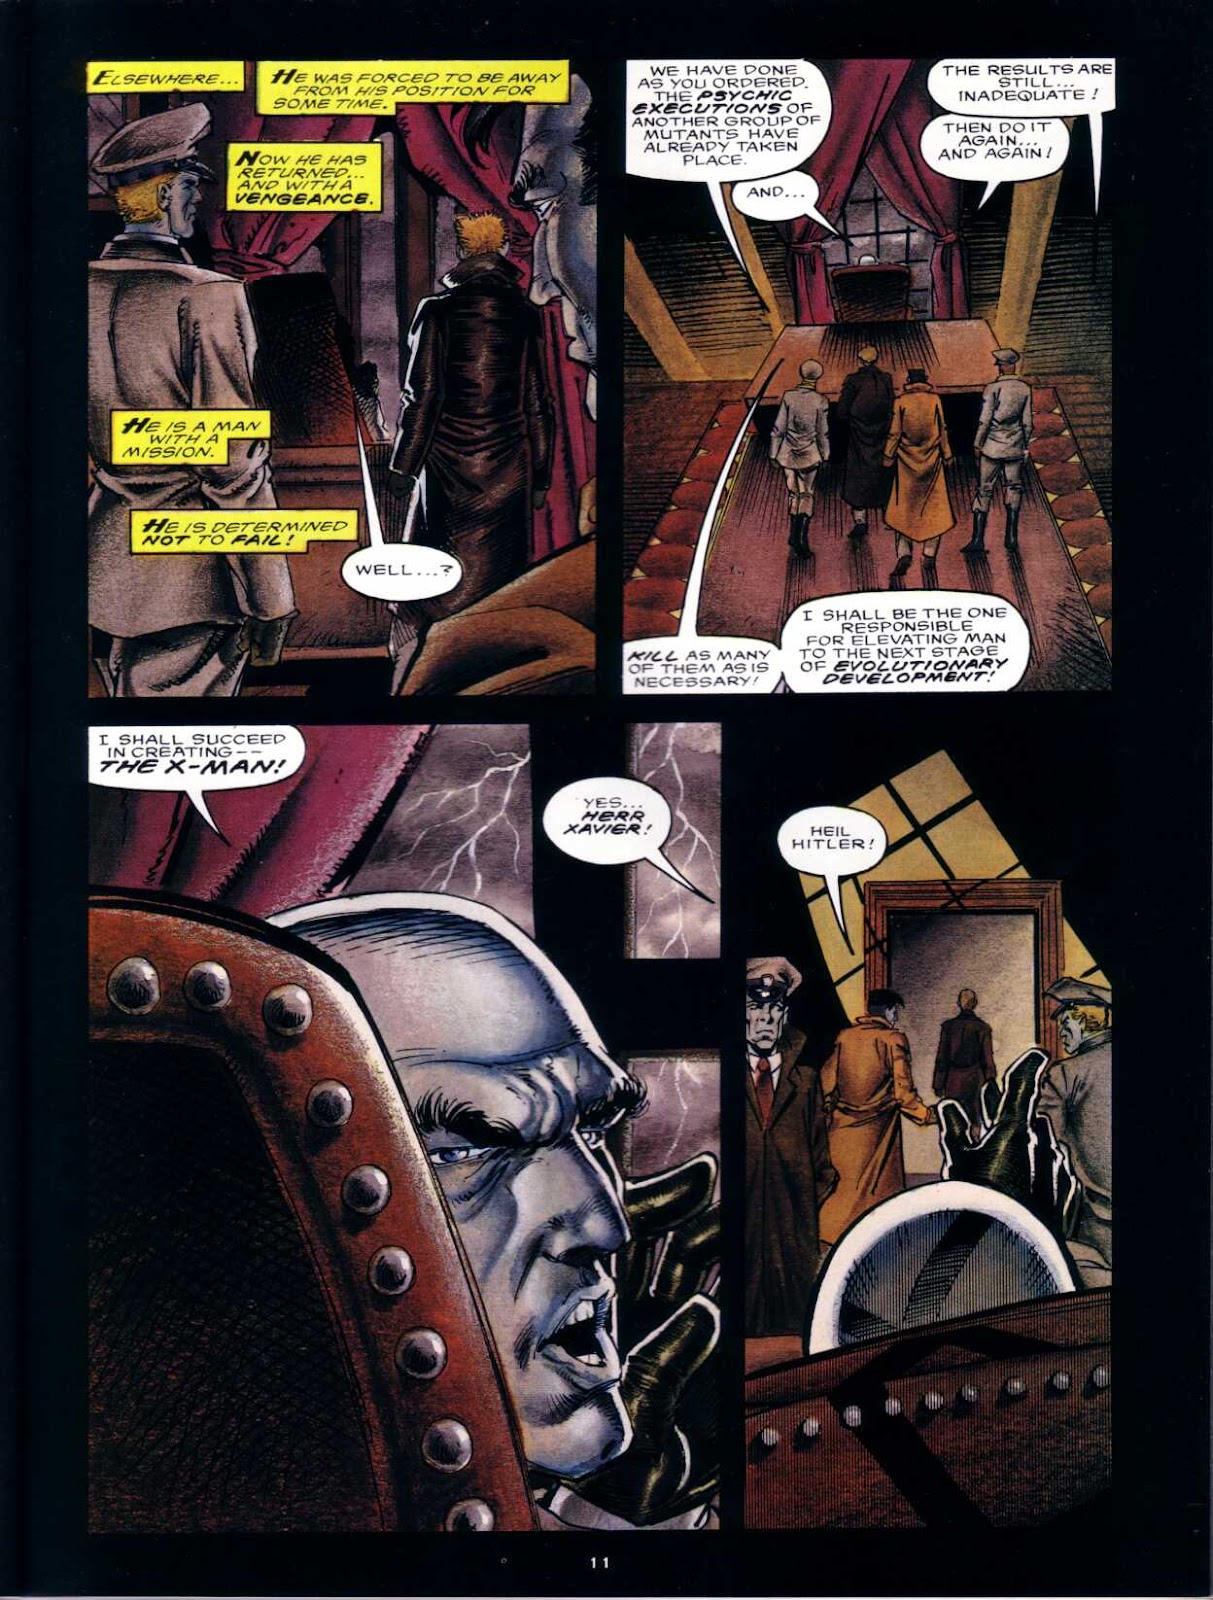 Marvel Graphic Novel issue 66 - Excalibur - Weird War III - Page 11